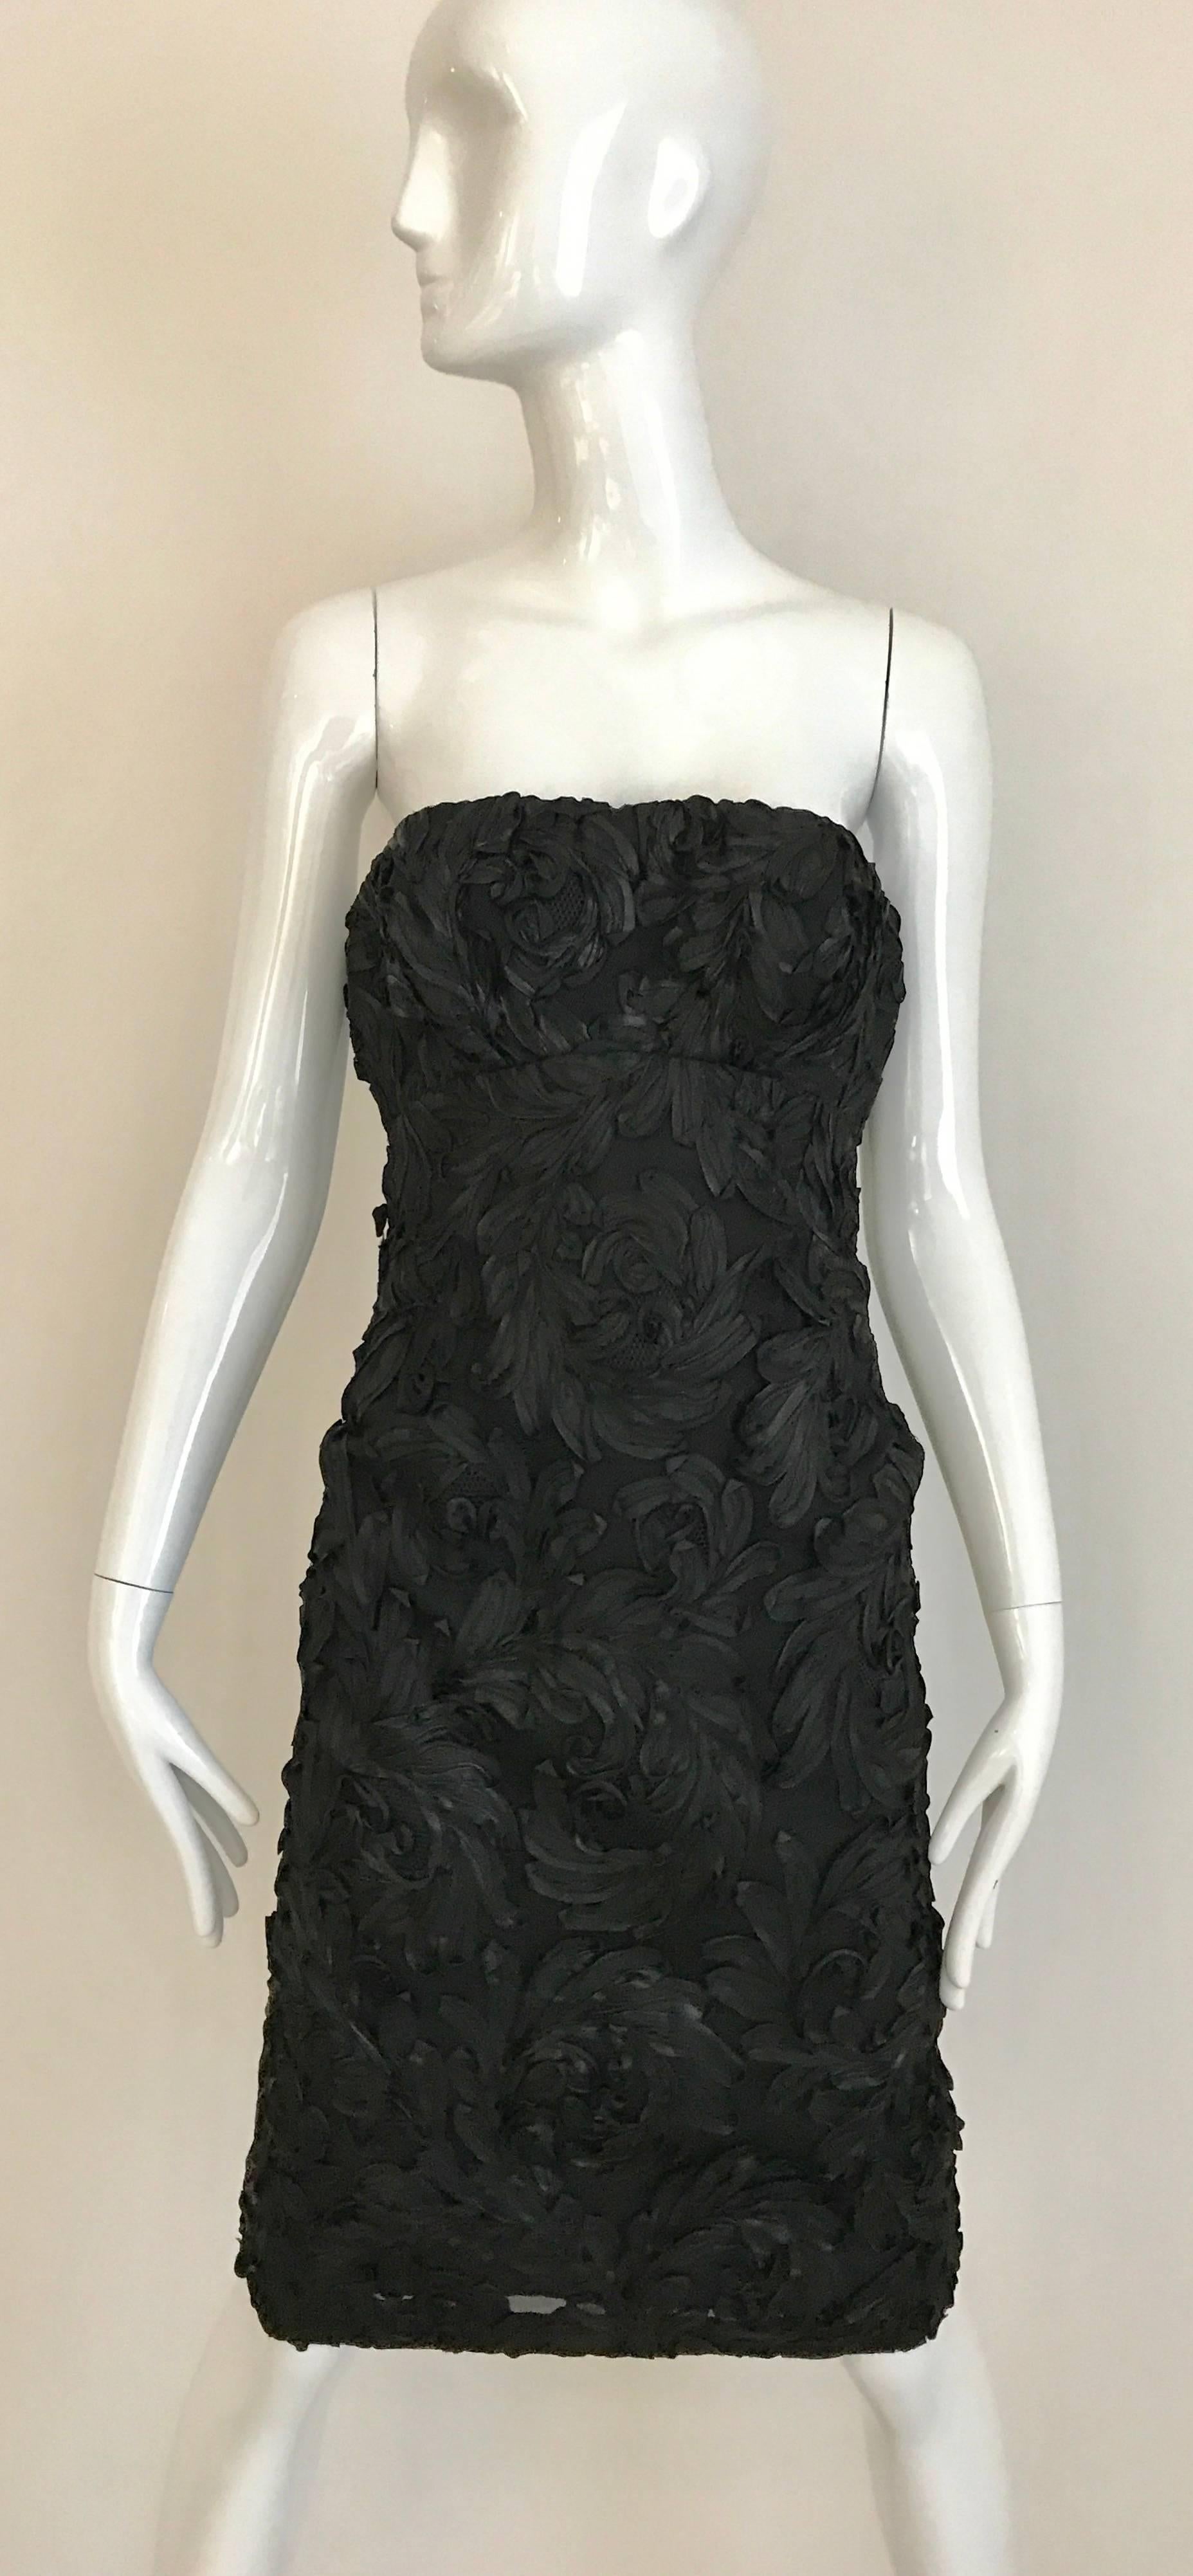 Vintage 1960/'s black velvet soutache cord beaded trim sleeveless sheath dress glam cocktail midcentury mod LBD